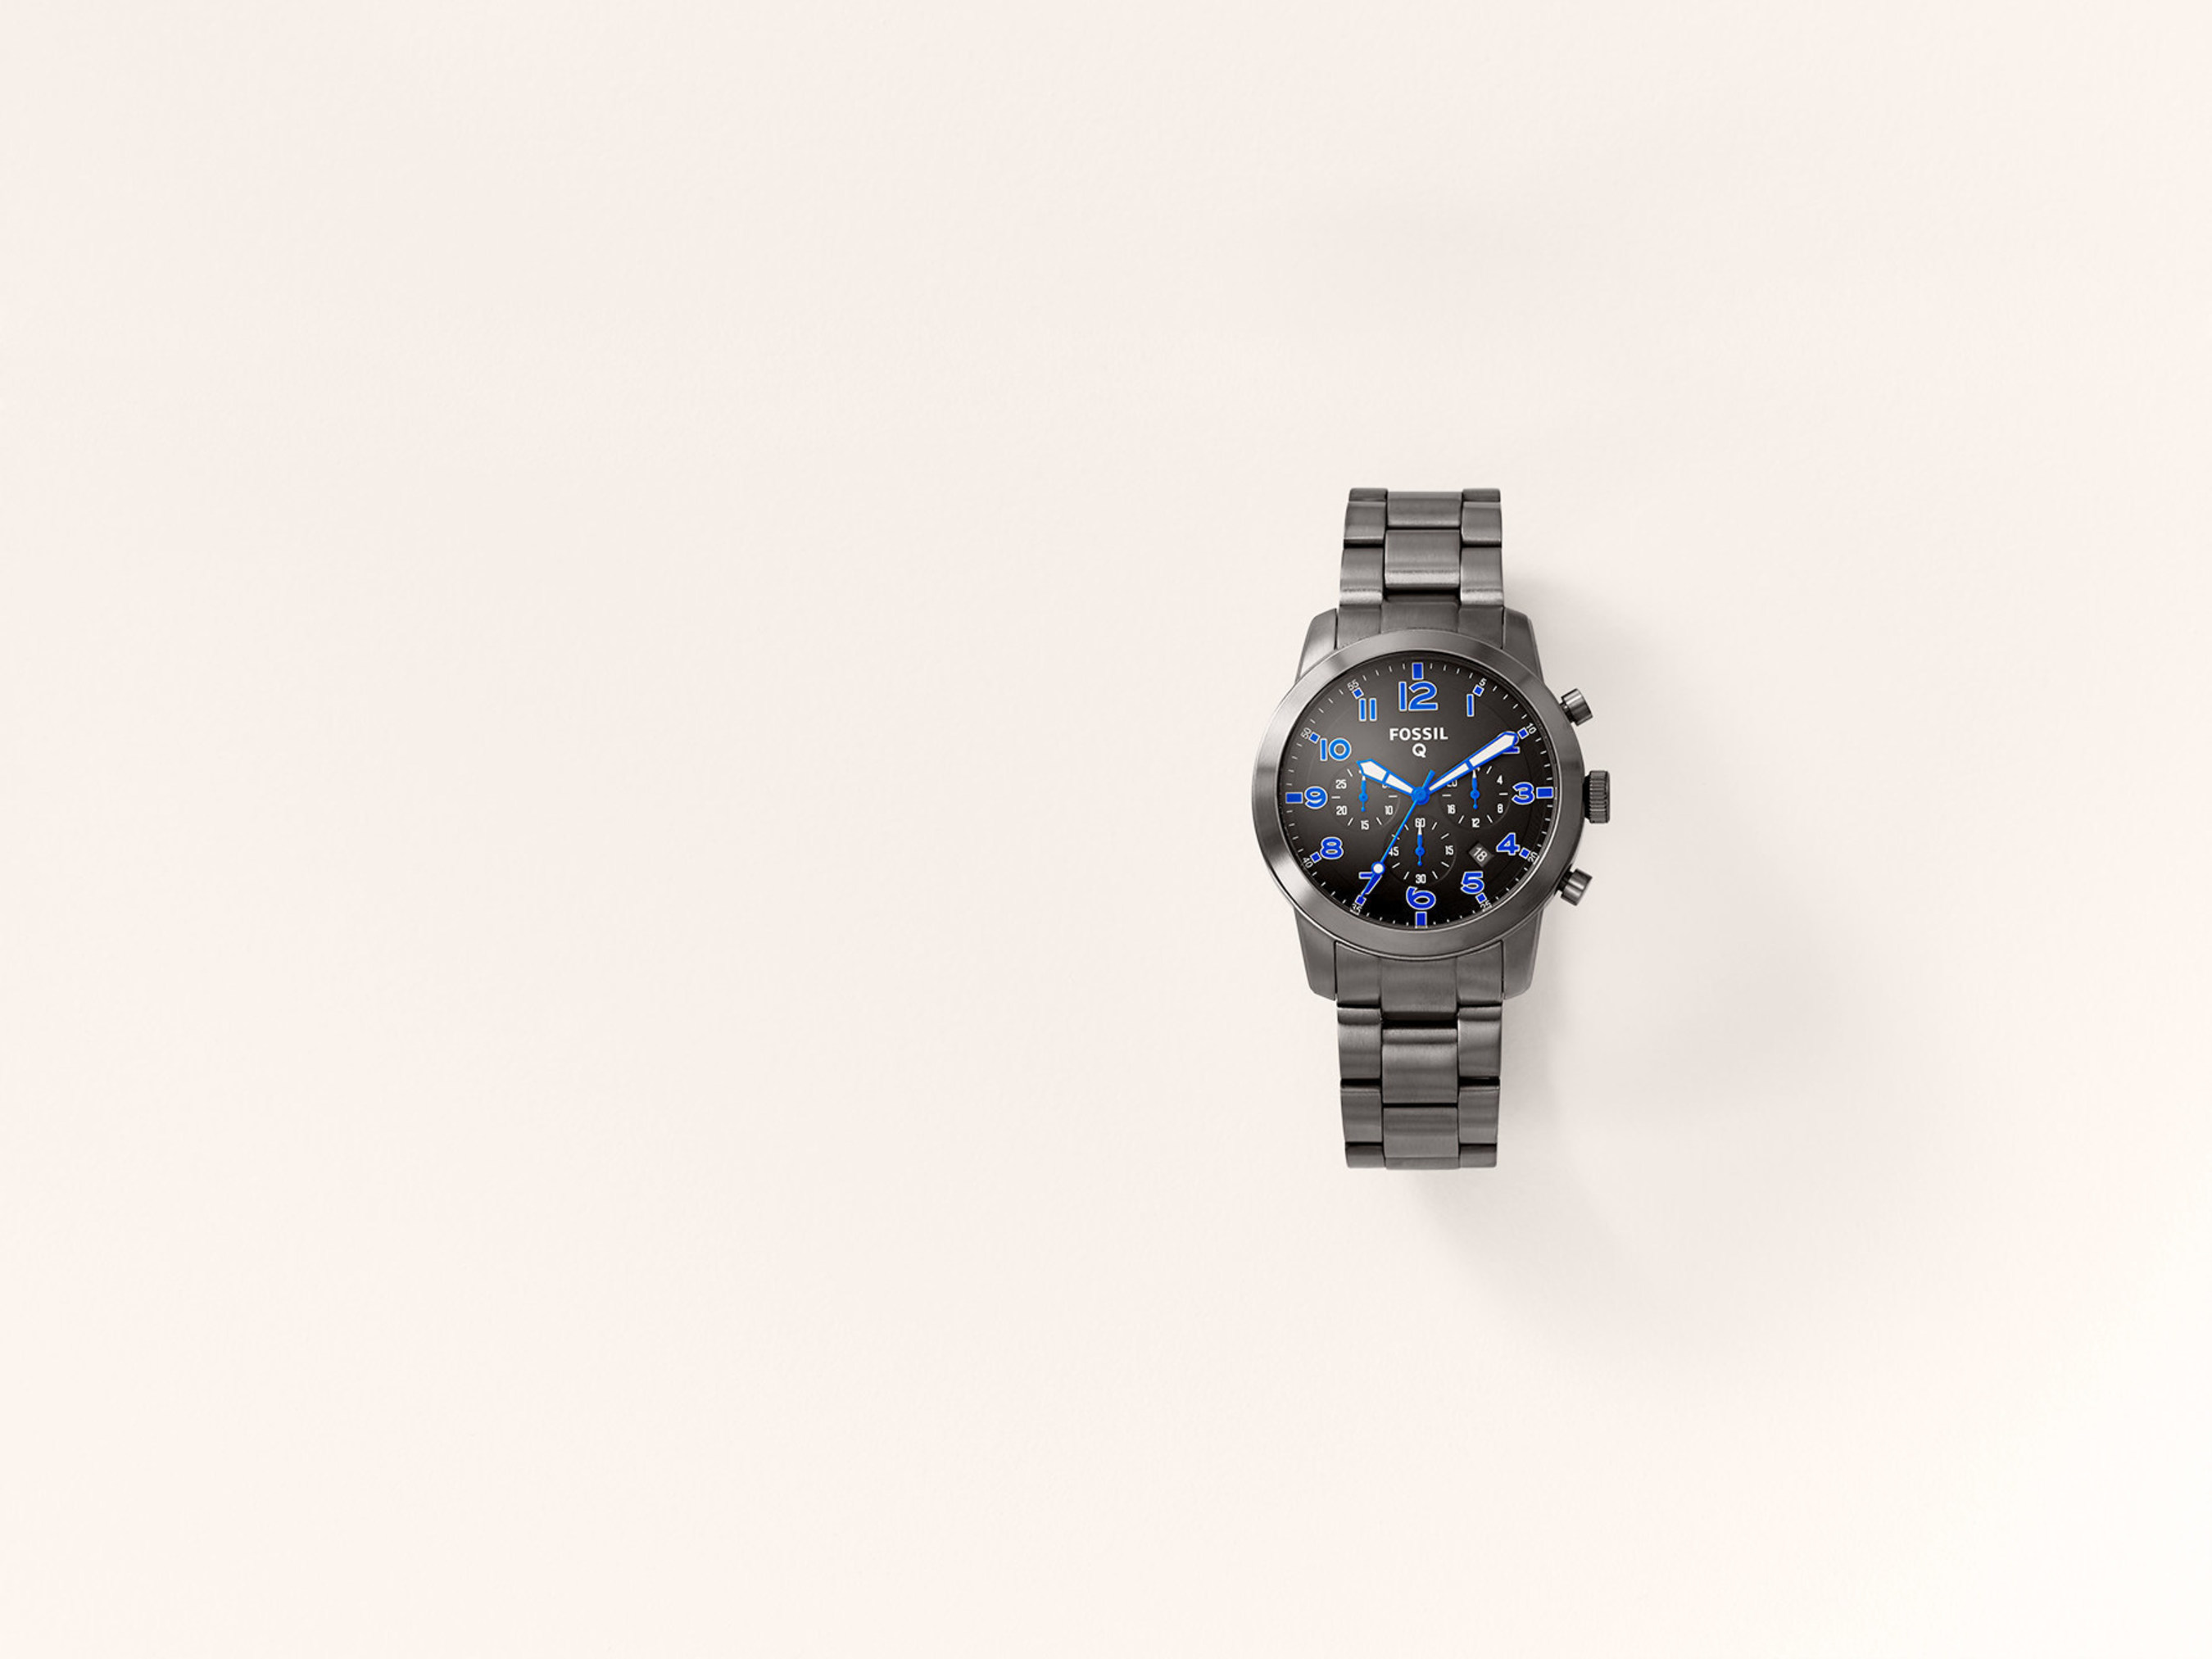 Fossil's Q54 Pilot smartwatch.